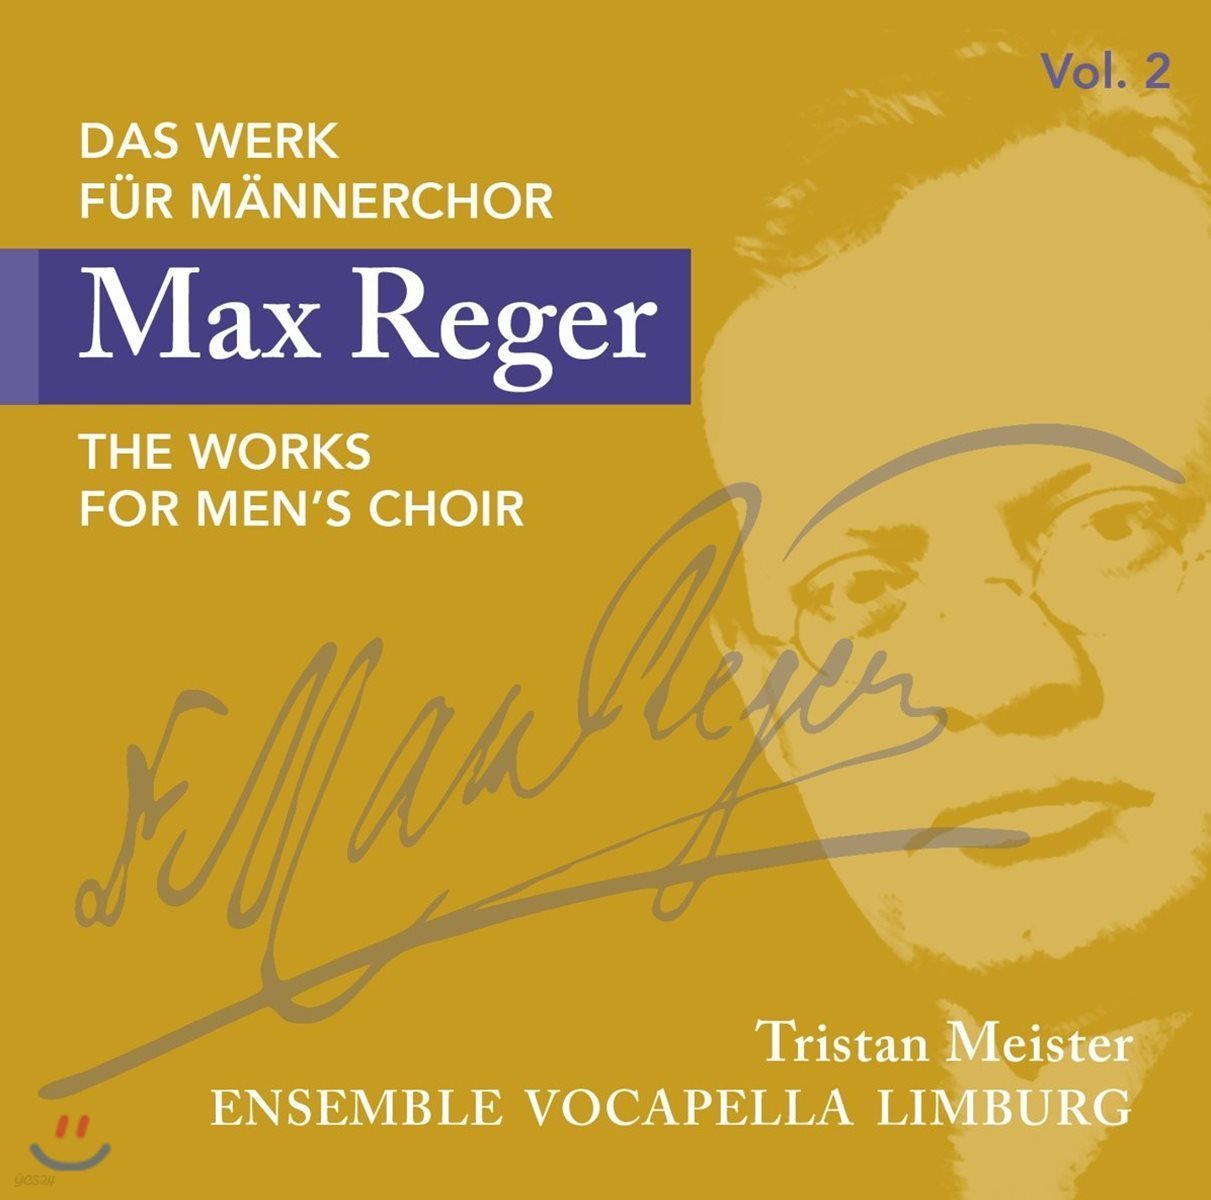 Ensemble Vocapella Limburg 막스 레거: 남성 합창단을 위한 작품 2집 - 열 개의 노래, 열두 개의 마드리갈 편곡 (Max Reger: The Works For Men's Choir)